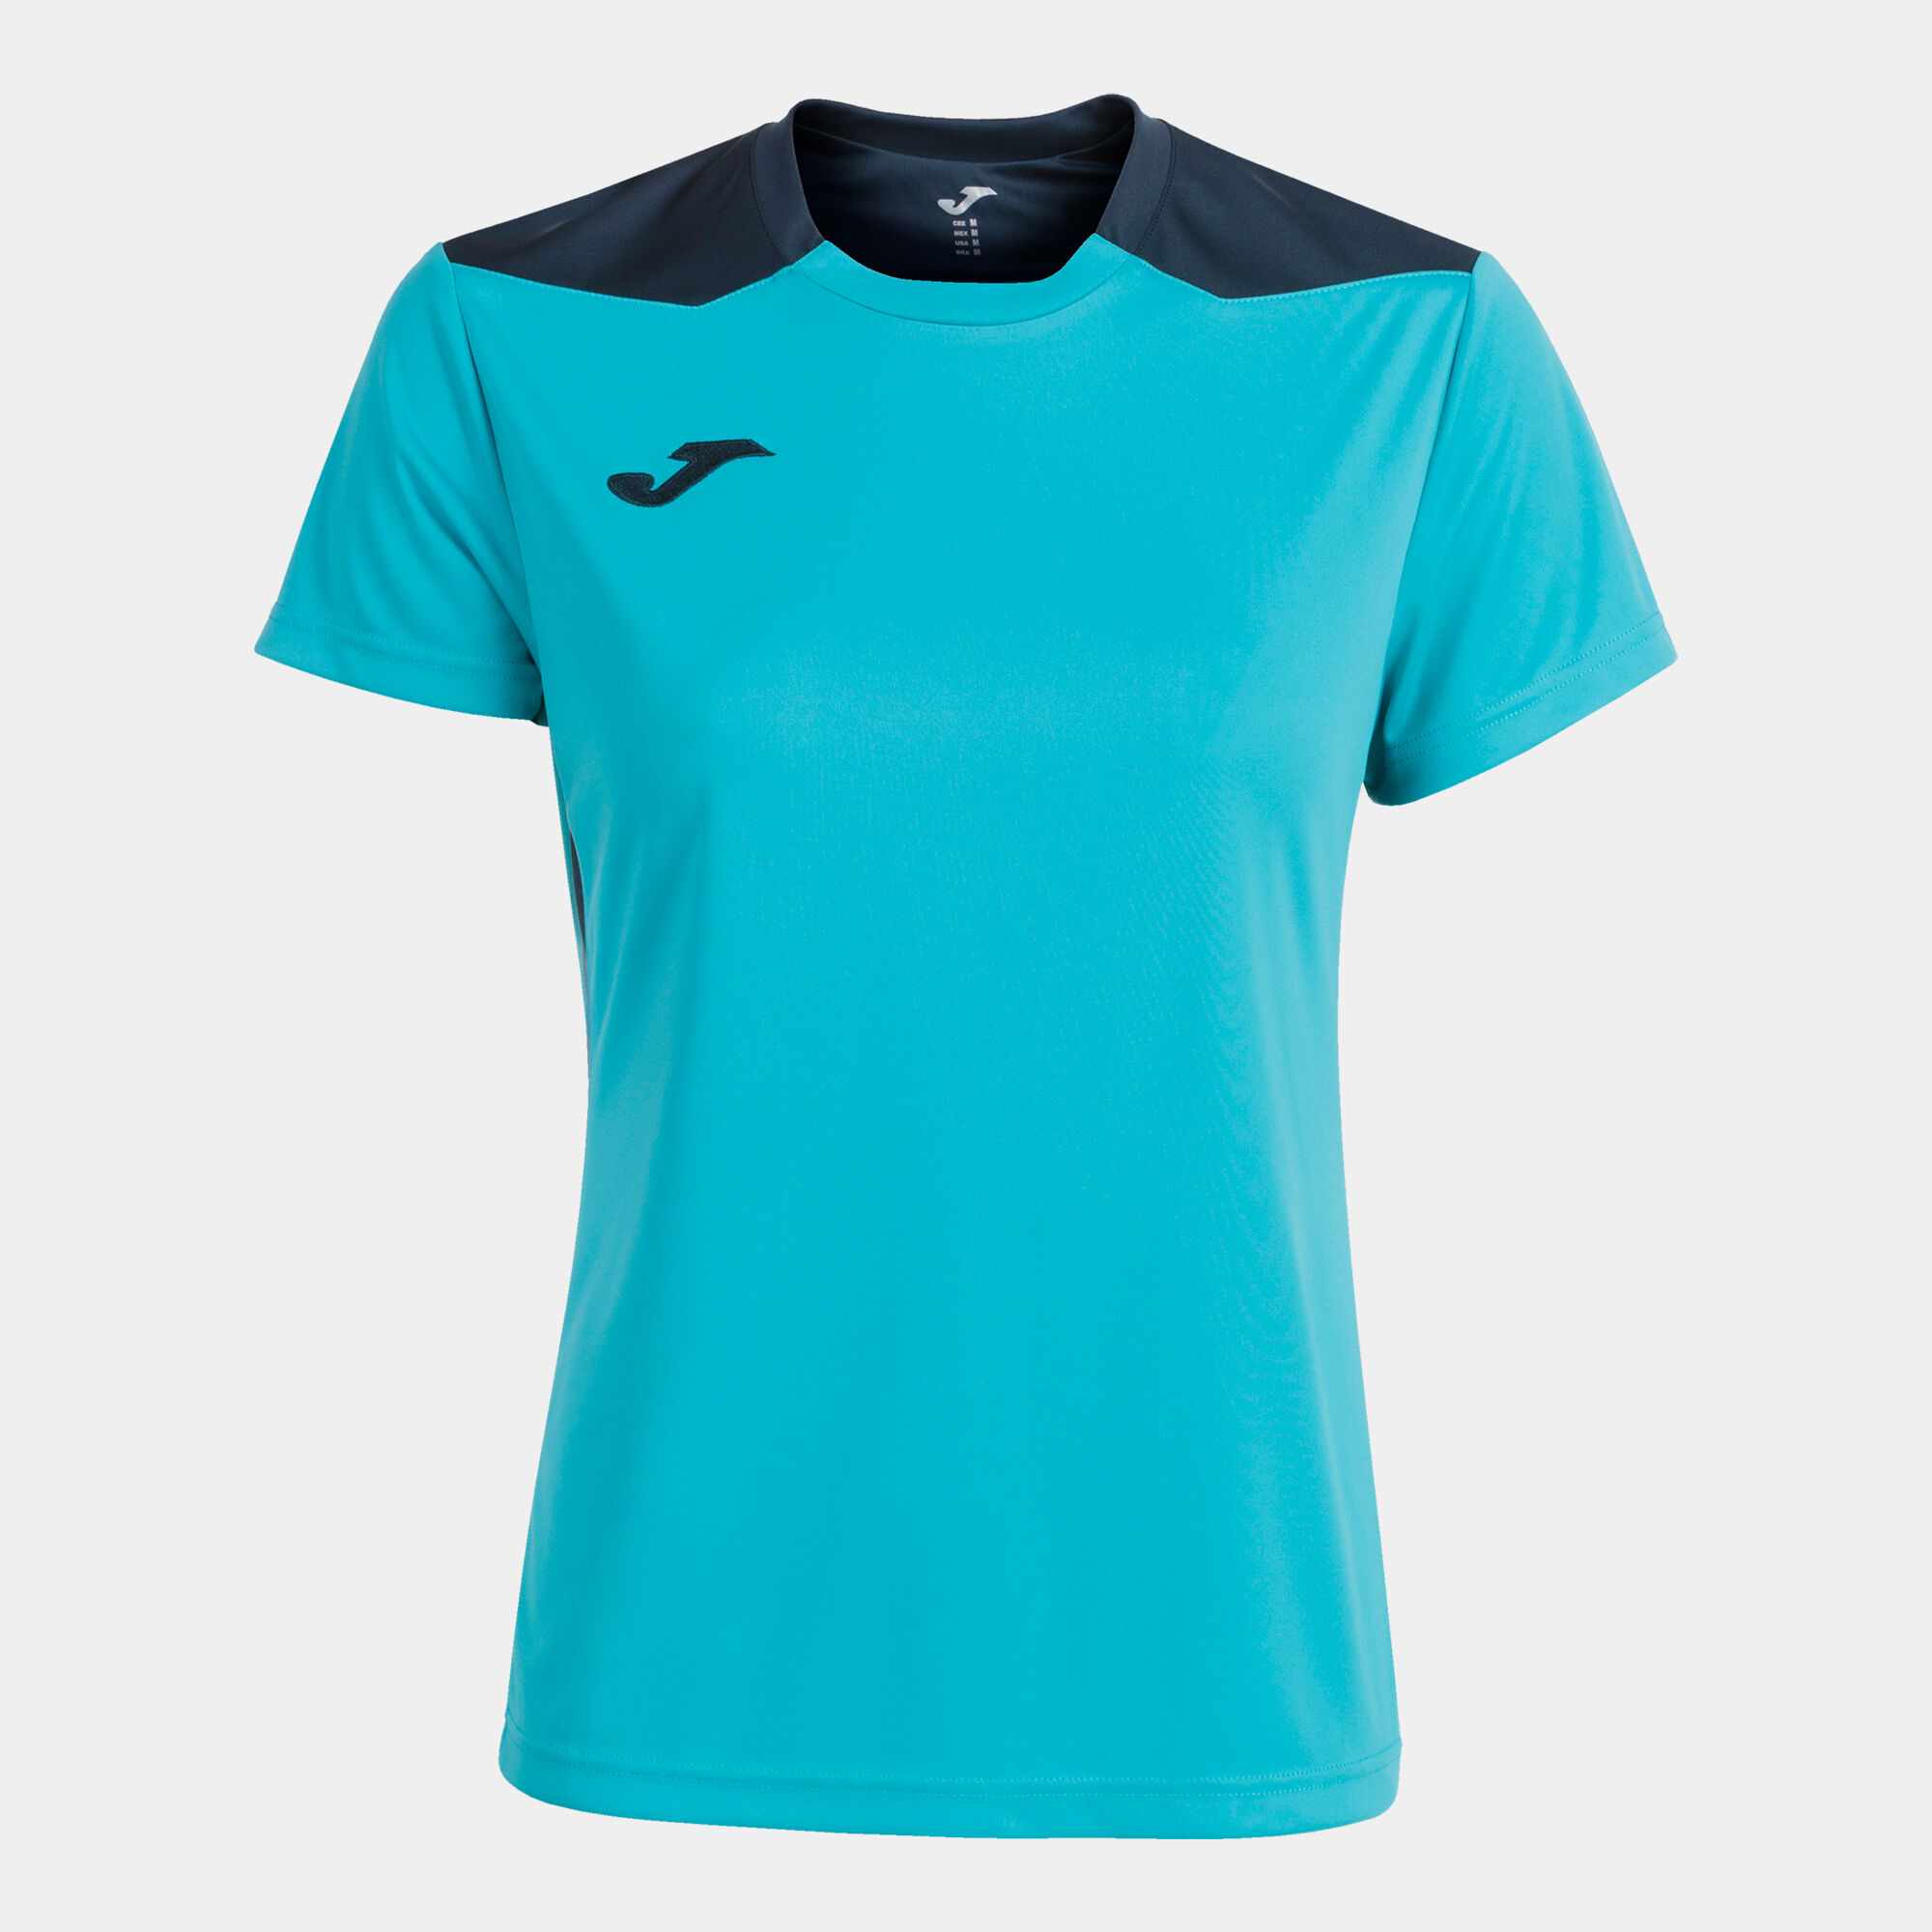 Shirt short sleeve woman Championship VI fluorescent turquoise navy blue